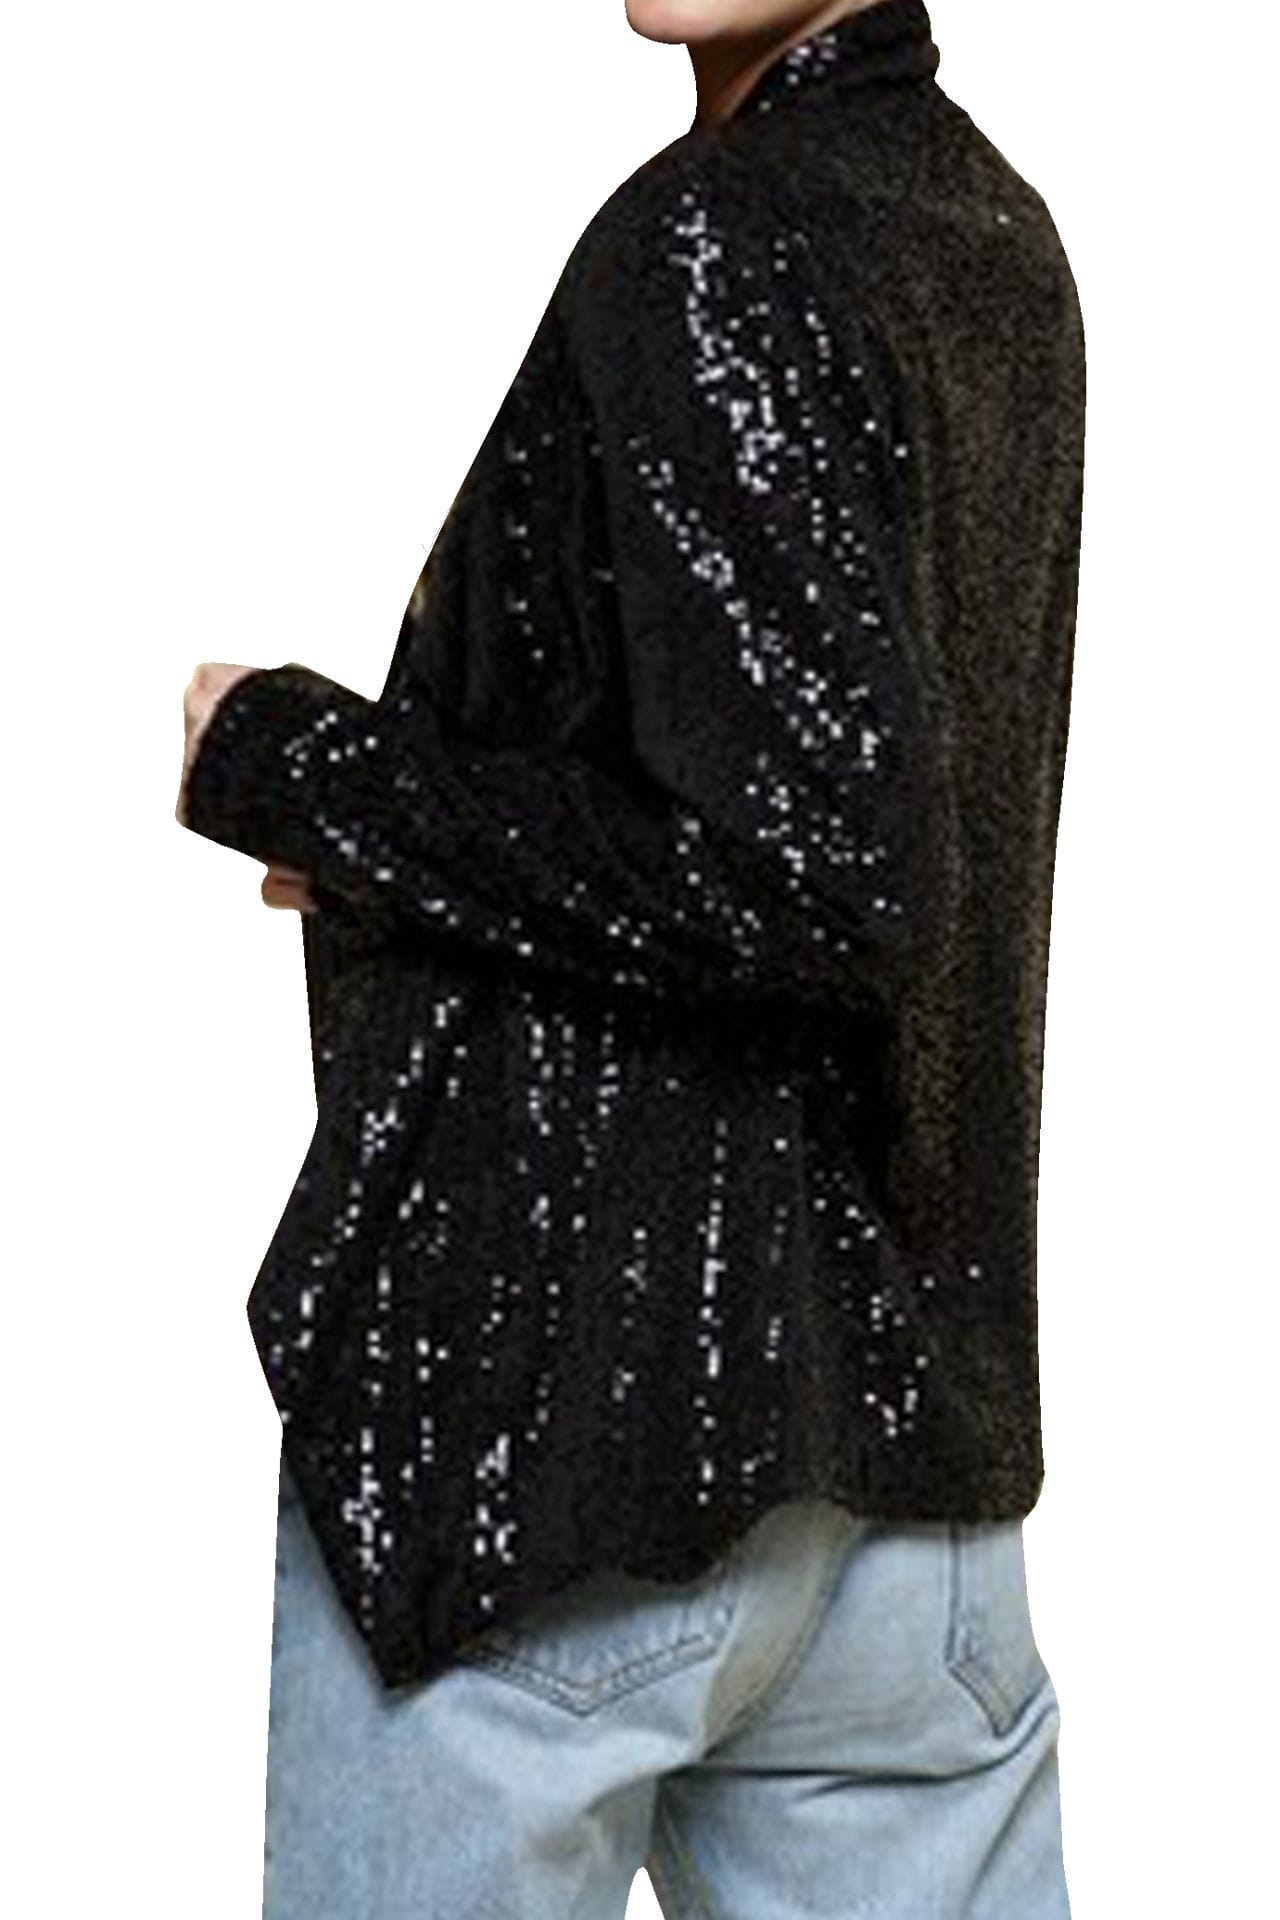 "Kyle X Shahida" "sequins jacket women's" "black sequin jacket womens" "sequence jackets for women" "black blazer with sequins"